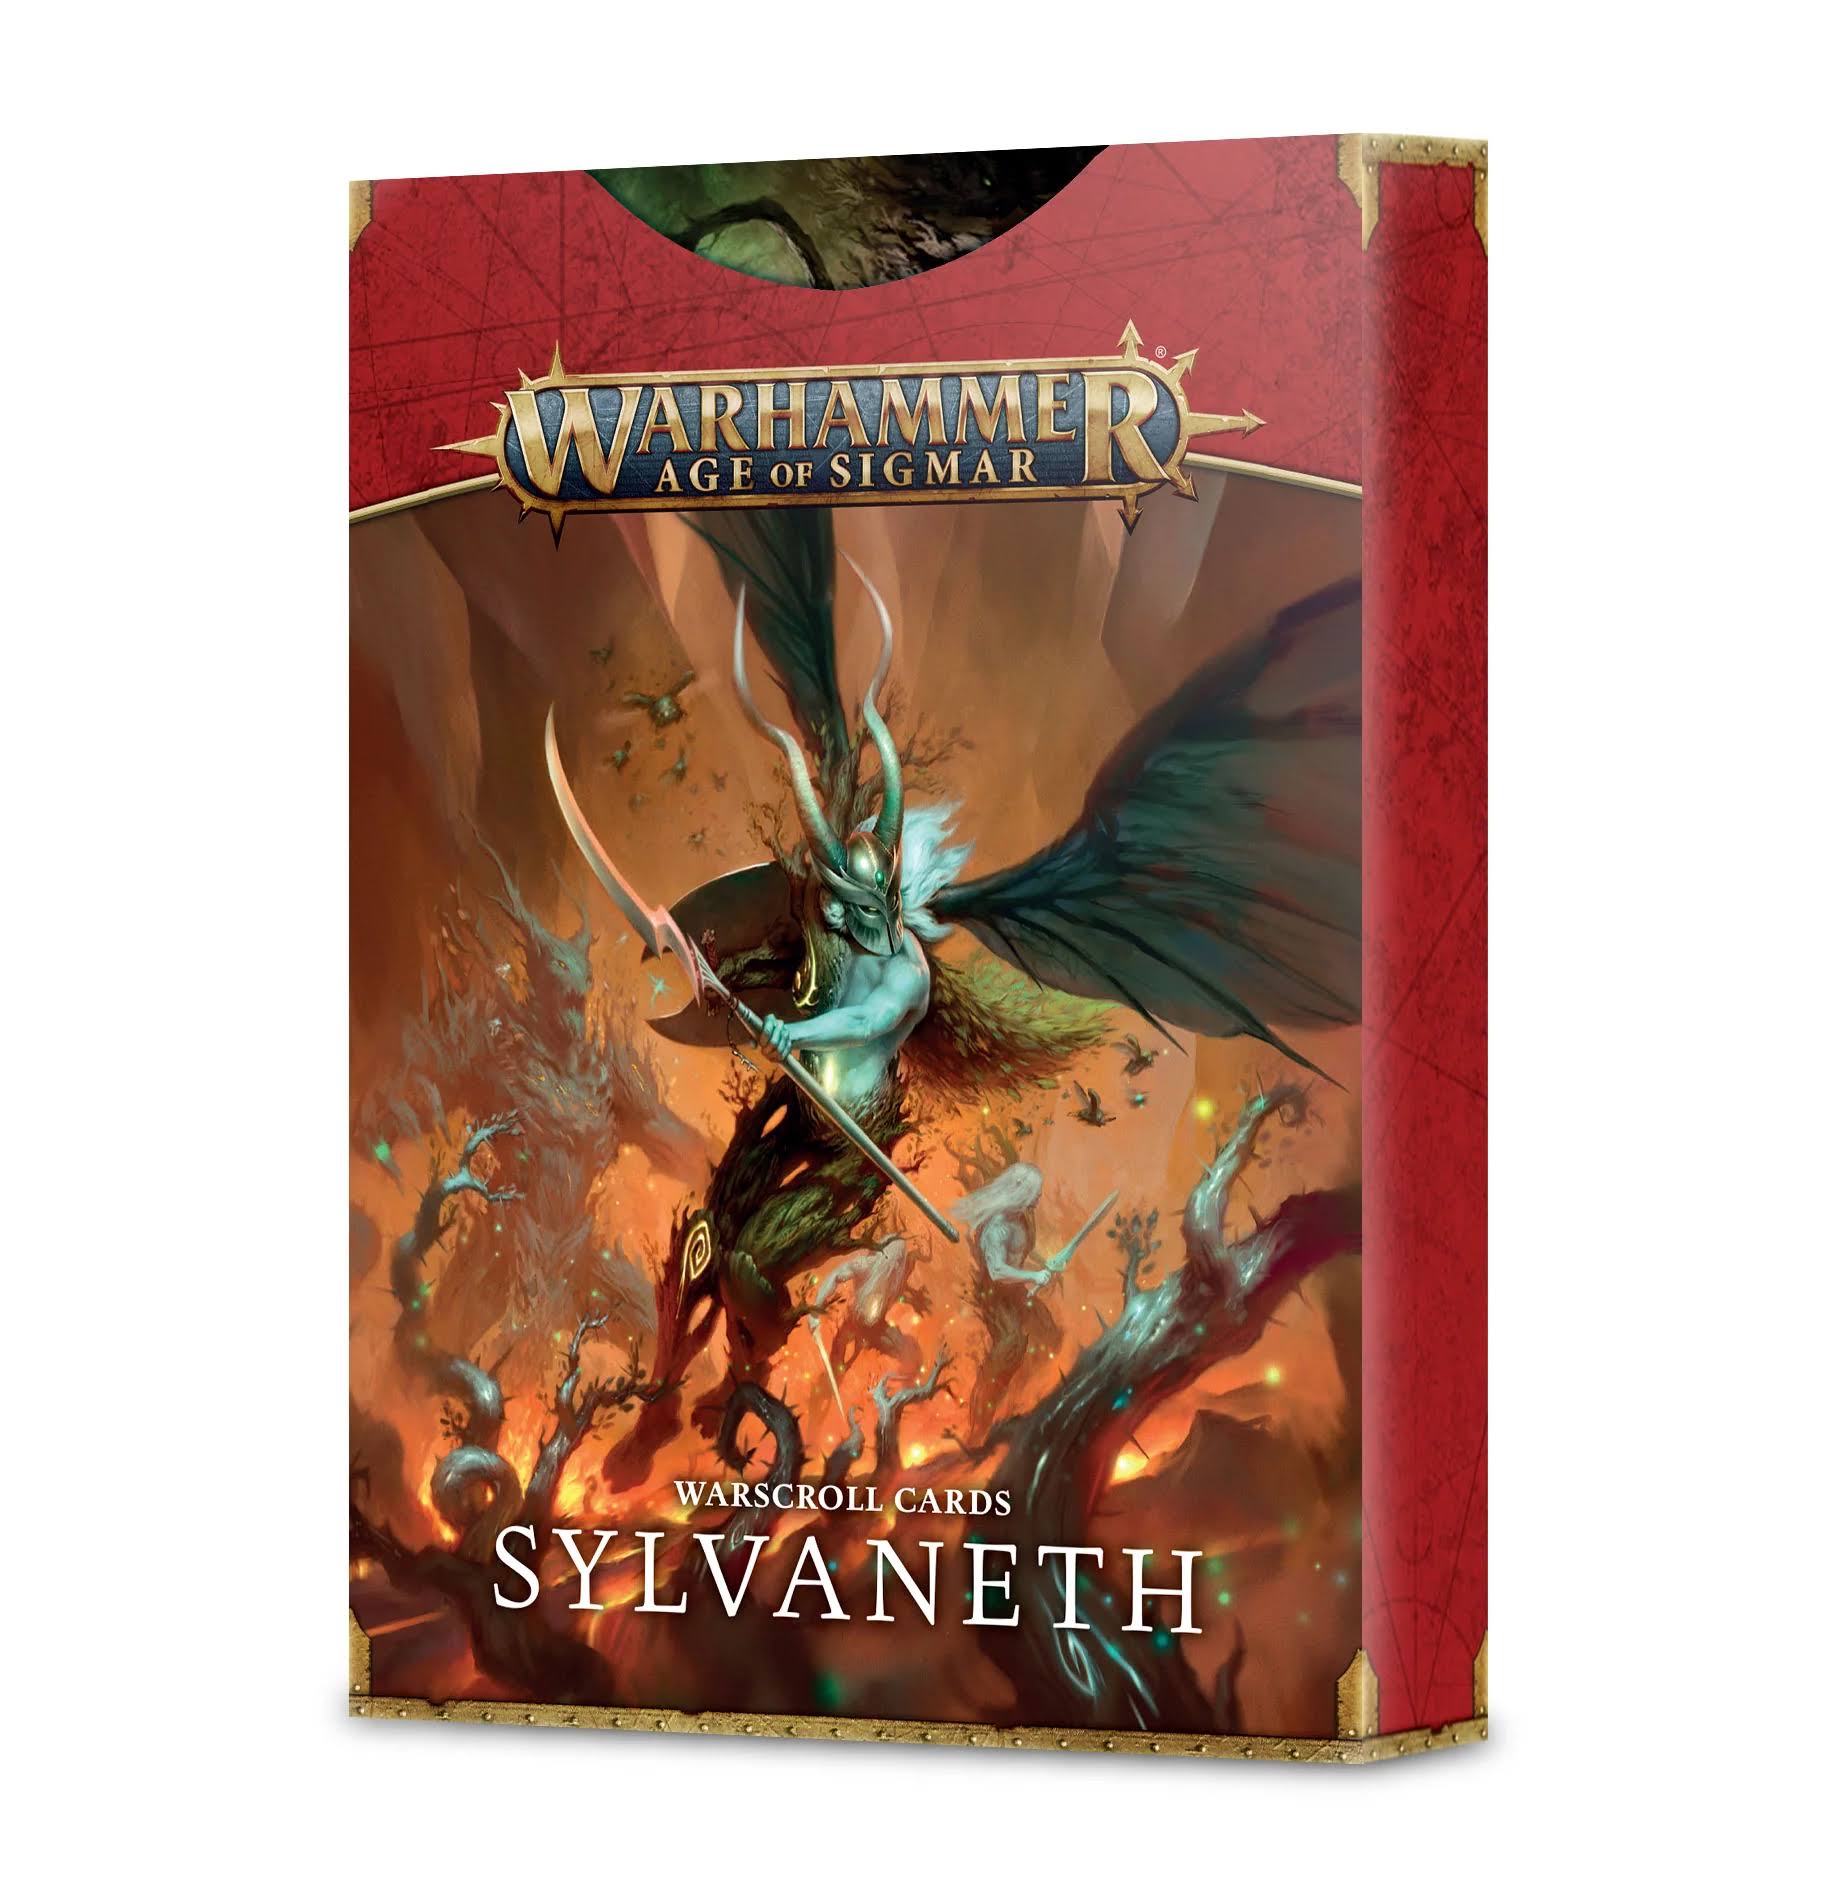 Warhammer Age of Sigmar: Warscroll Cards Sylvaneth